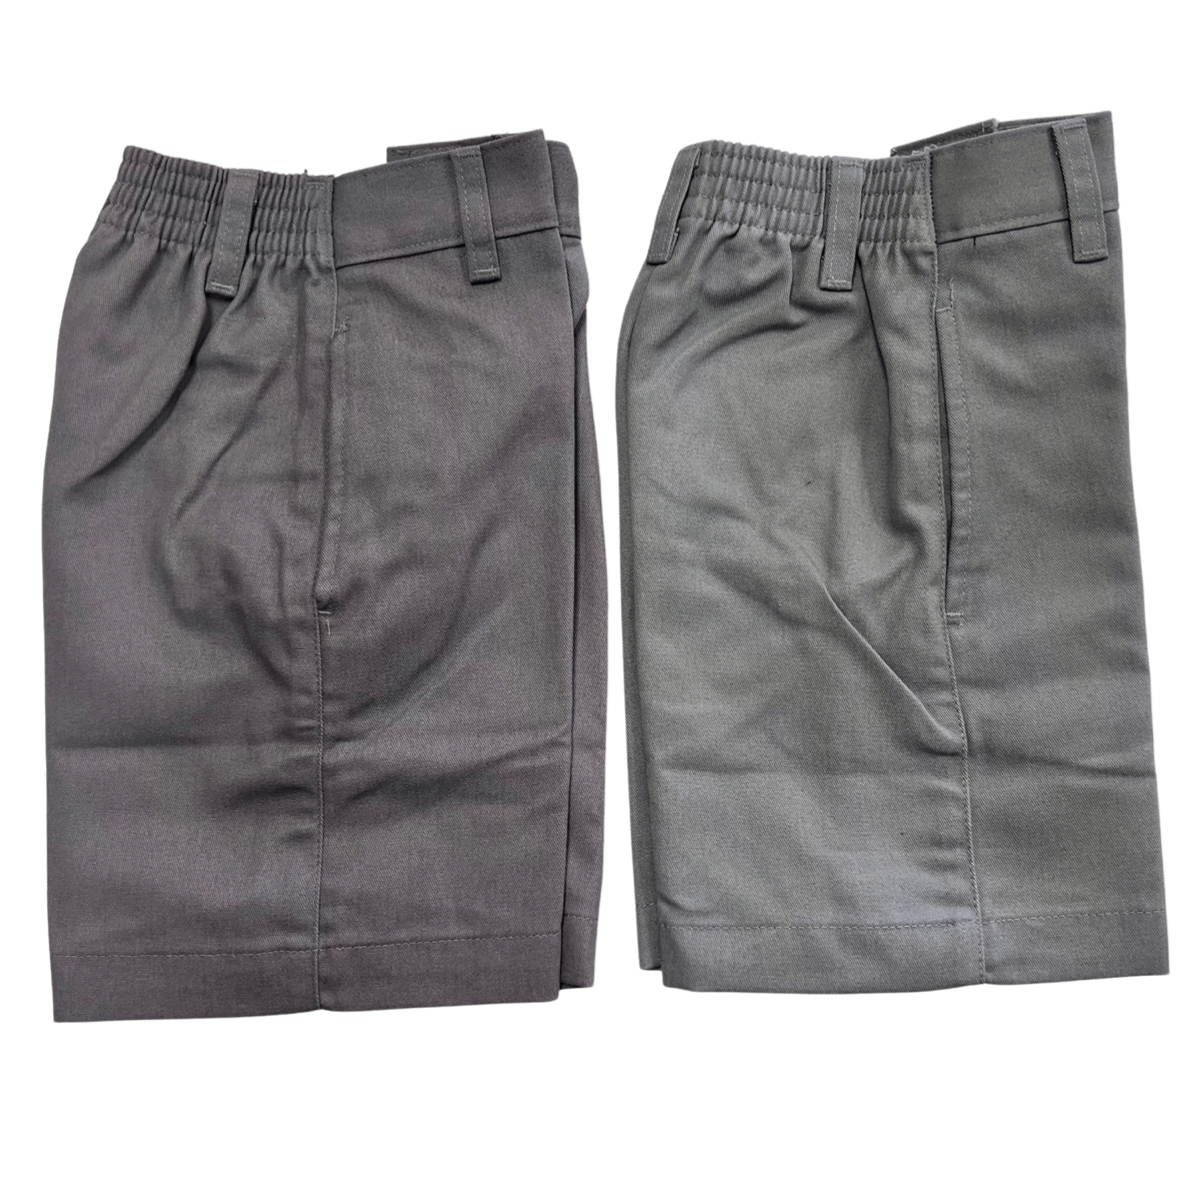 School Uniform Boys Husky Pants by Tom Sawyer/Elderwear